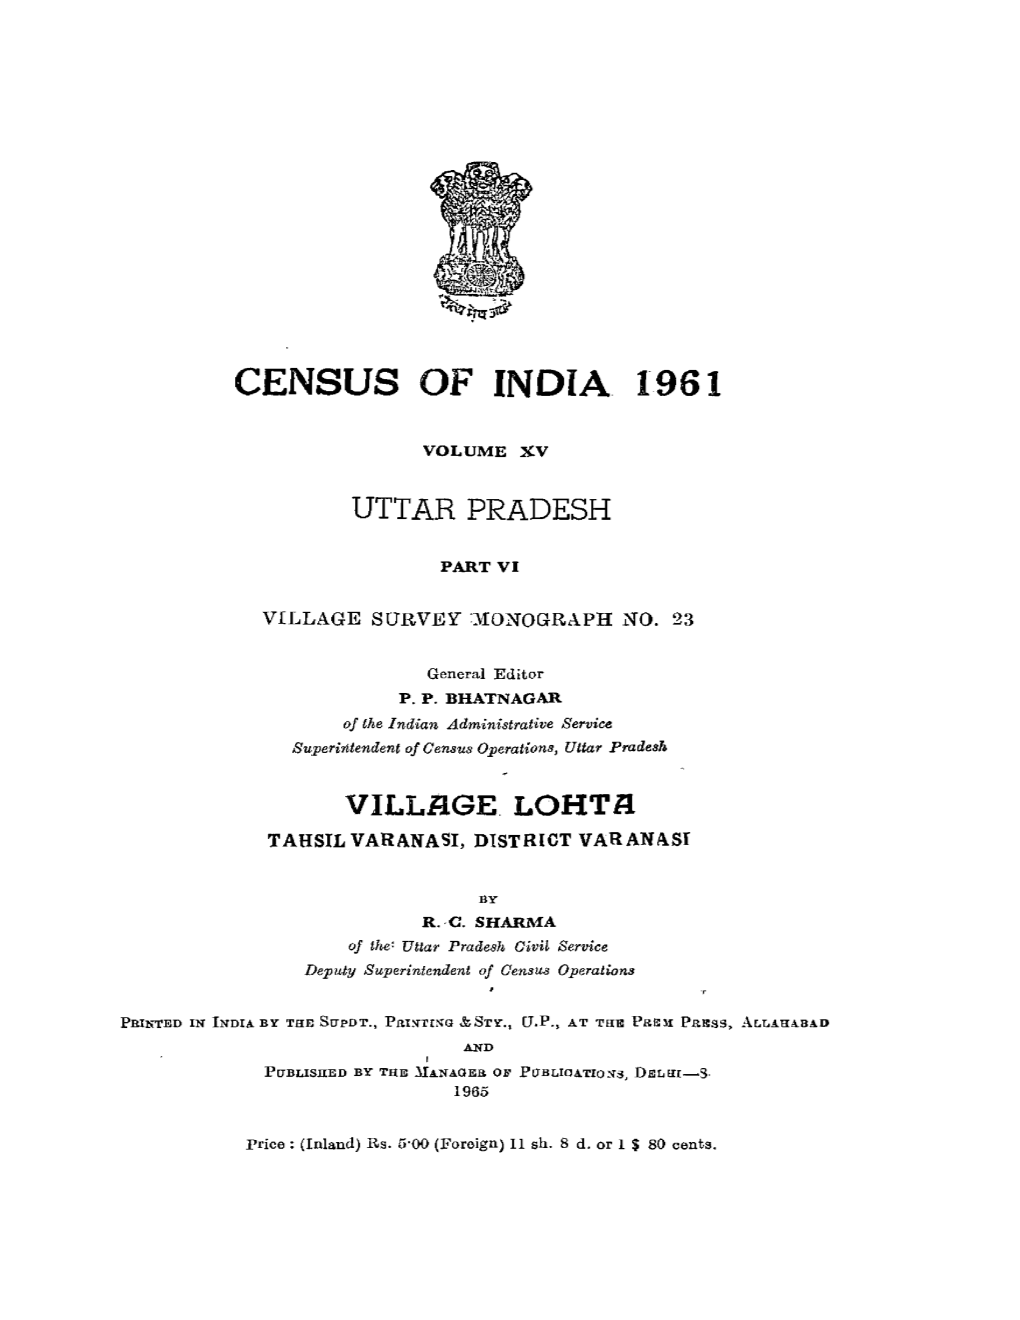 Village Survey Monograph No-23, Village Lohta, Part VI, Vol-XV, Uttar Pradesh